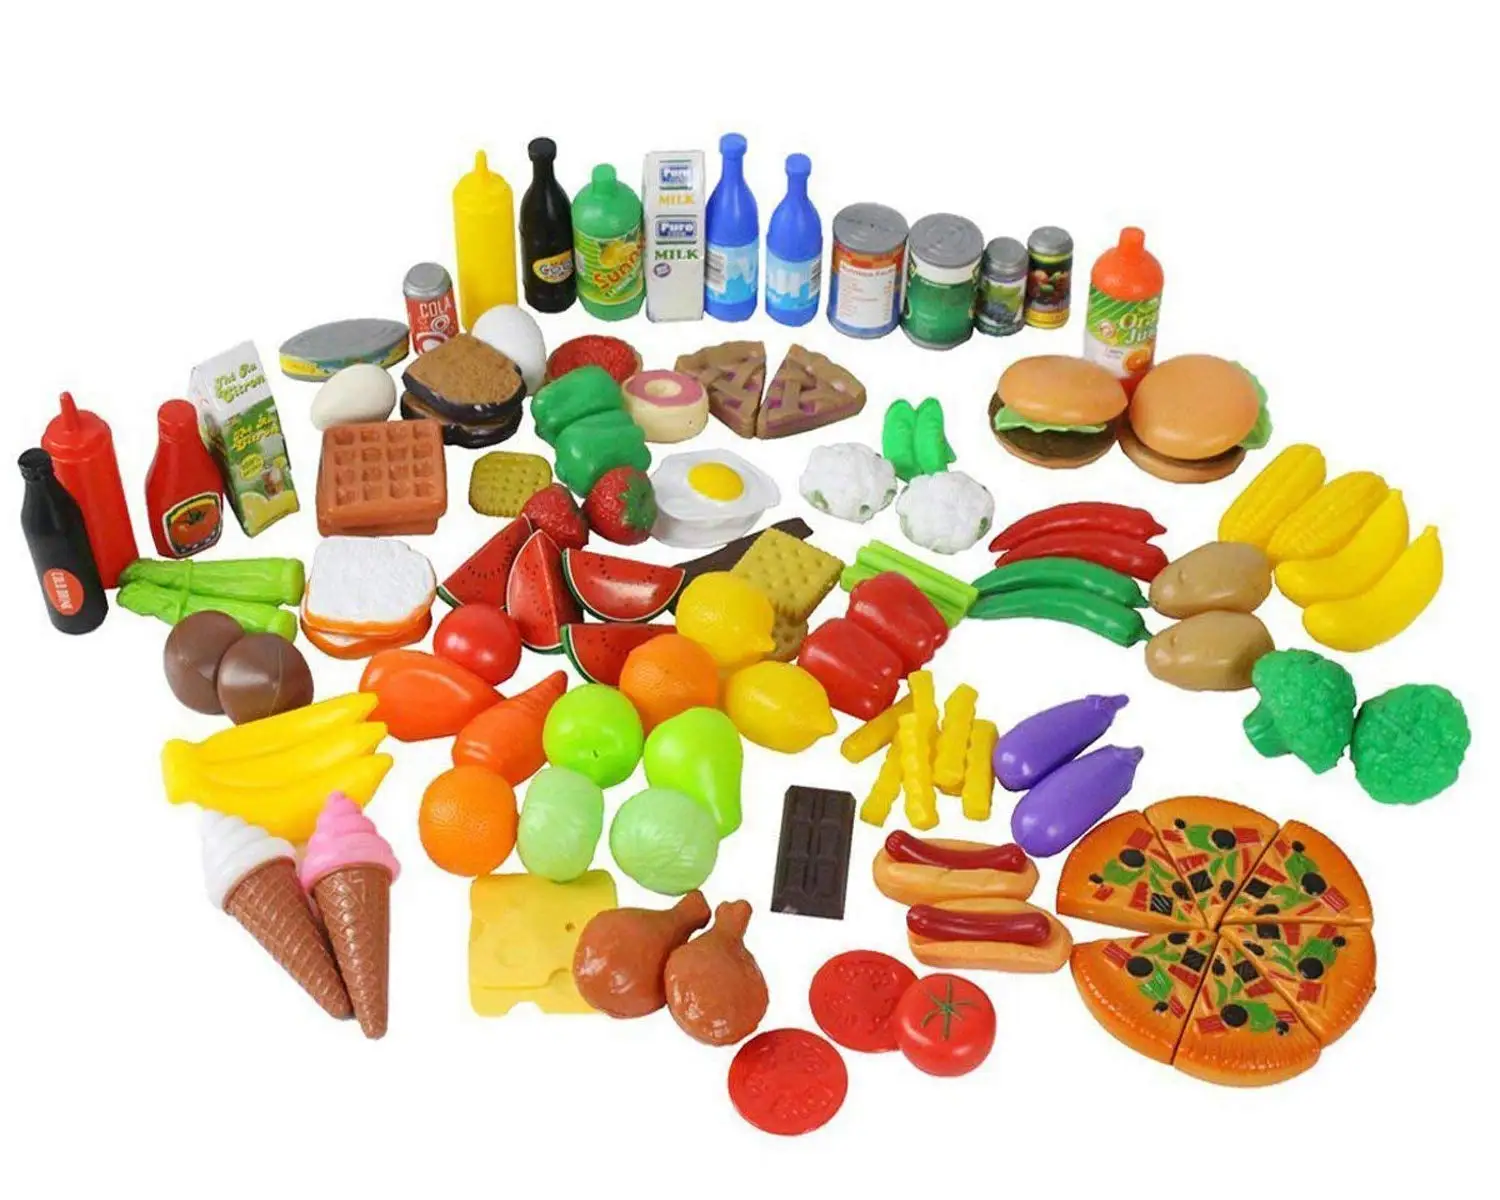 Cheap Childrens Kitchen Toys Find Childrens Kitchen Toys Deals On Line At Alibaba Com